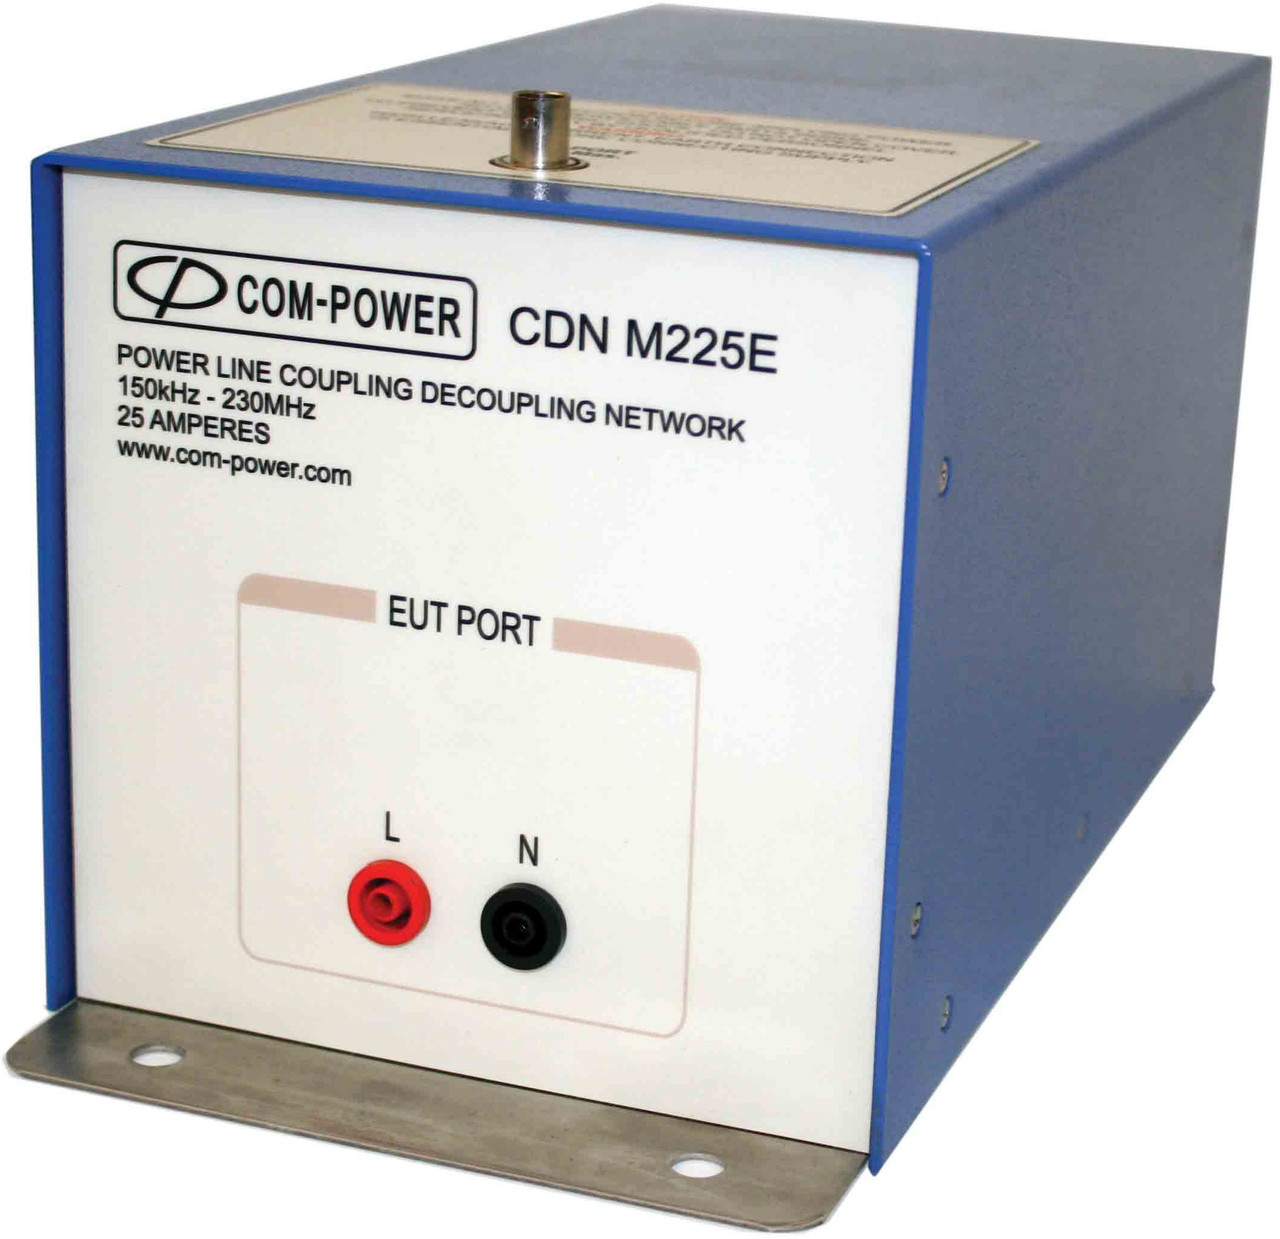 Com-Power CDN-M225E Coupling Decoupling Network for Unscreened Power Supply Lines